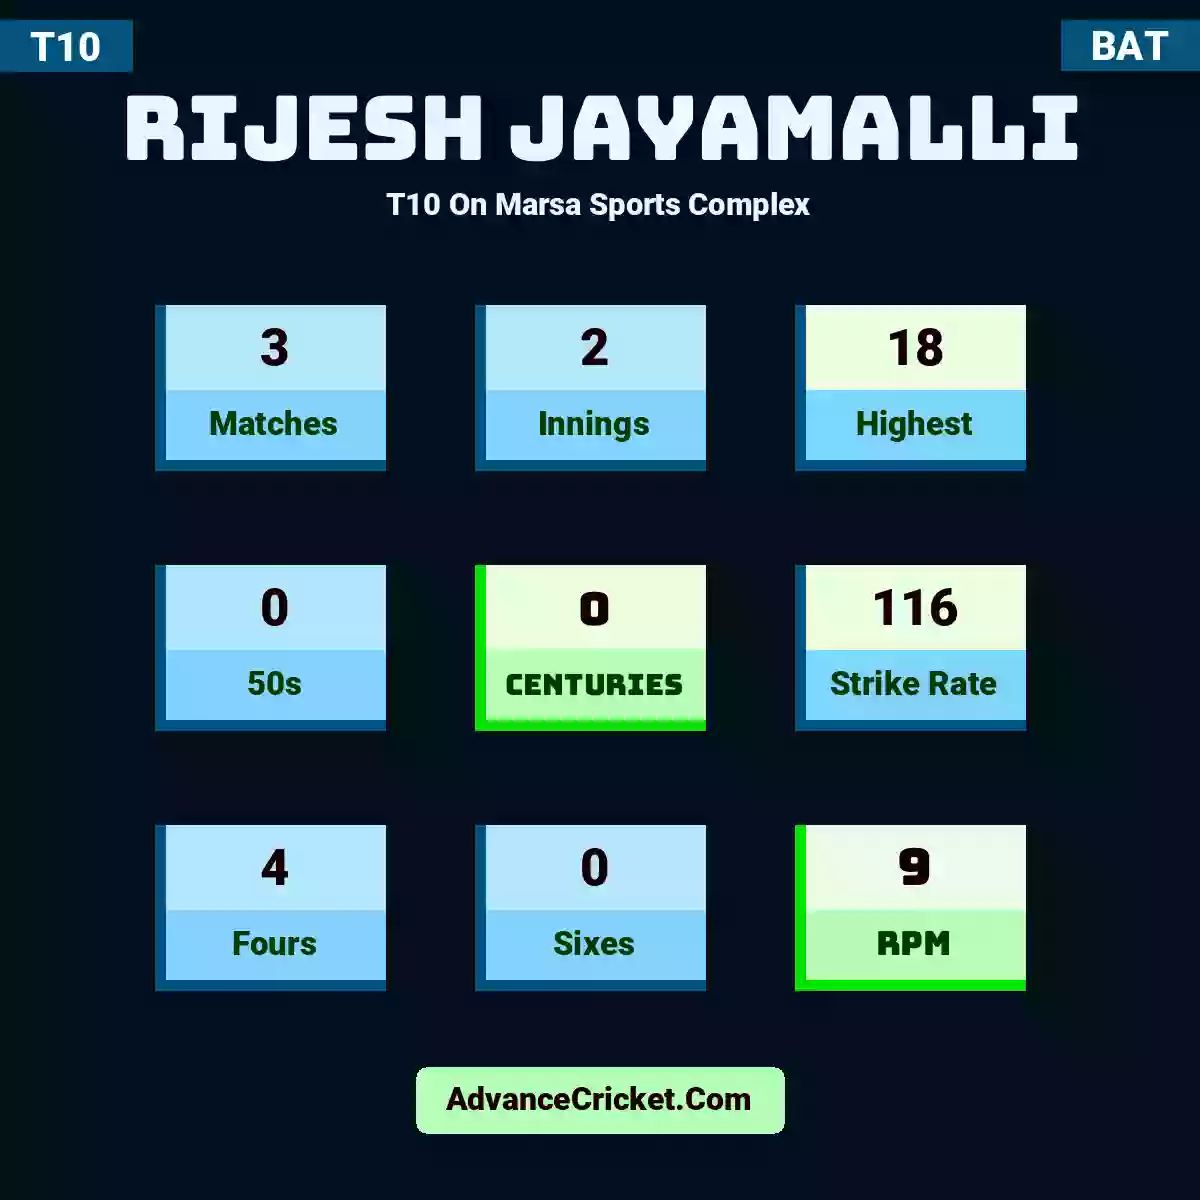 Rijesh Jayamalli T10  On Marsa Sports Complex, Rijesh Jayamalli played 3 matches, scored 18 runs as highest, 0 half-centuries, and 0 centuries, with a strike rate of 116. R.Jayamalli hit 4 fours and 0 sixes, with an RPM of 9.